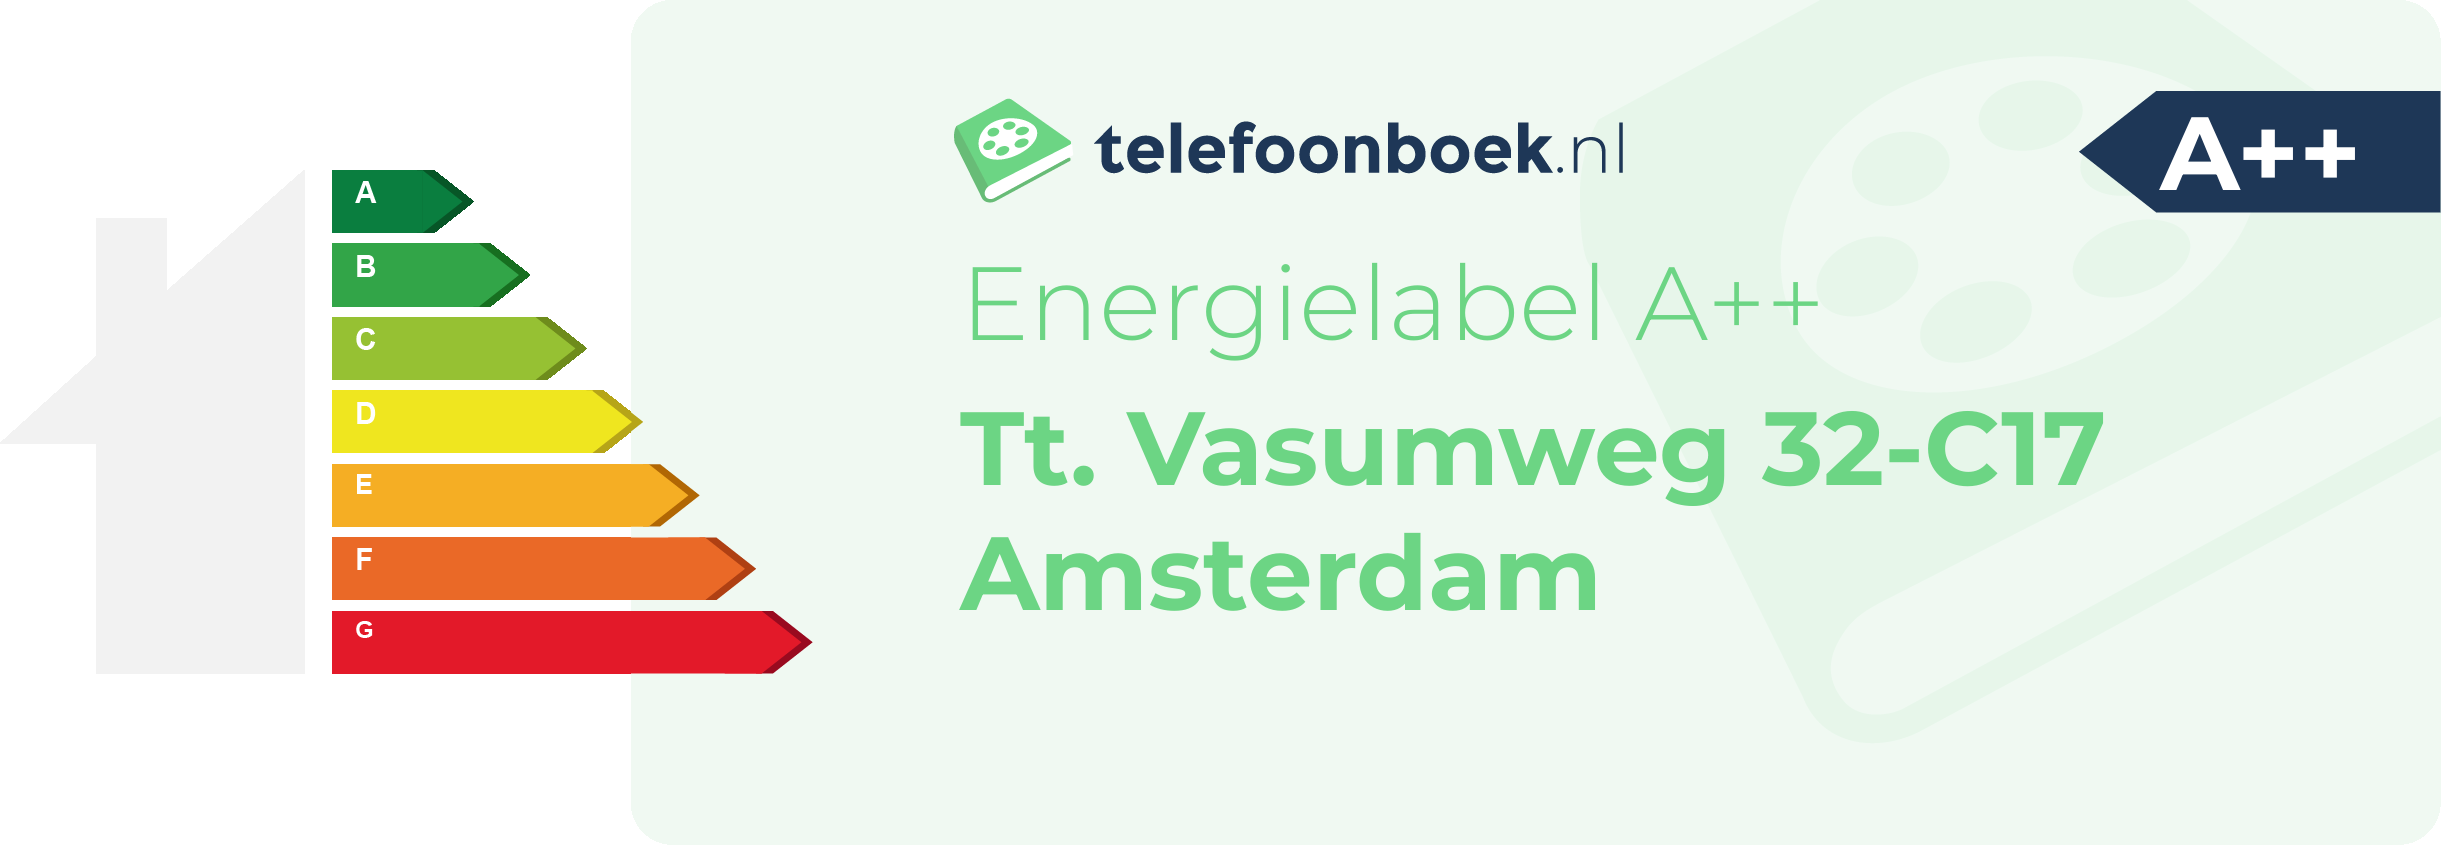 Energielabel Tt. Vasumweg 32-C17 Amsterdam